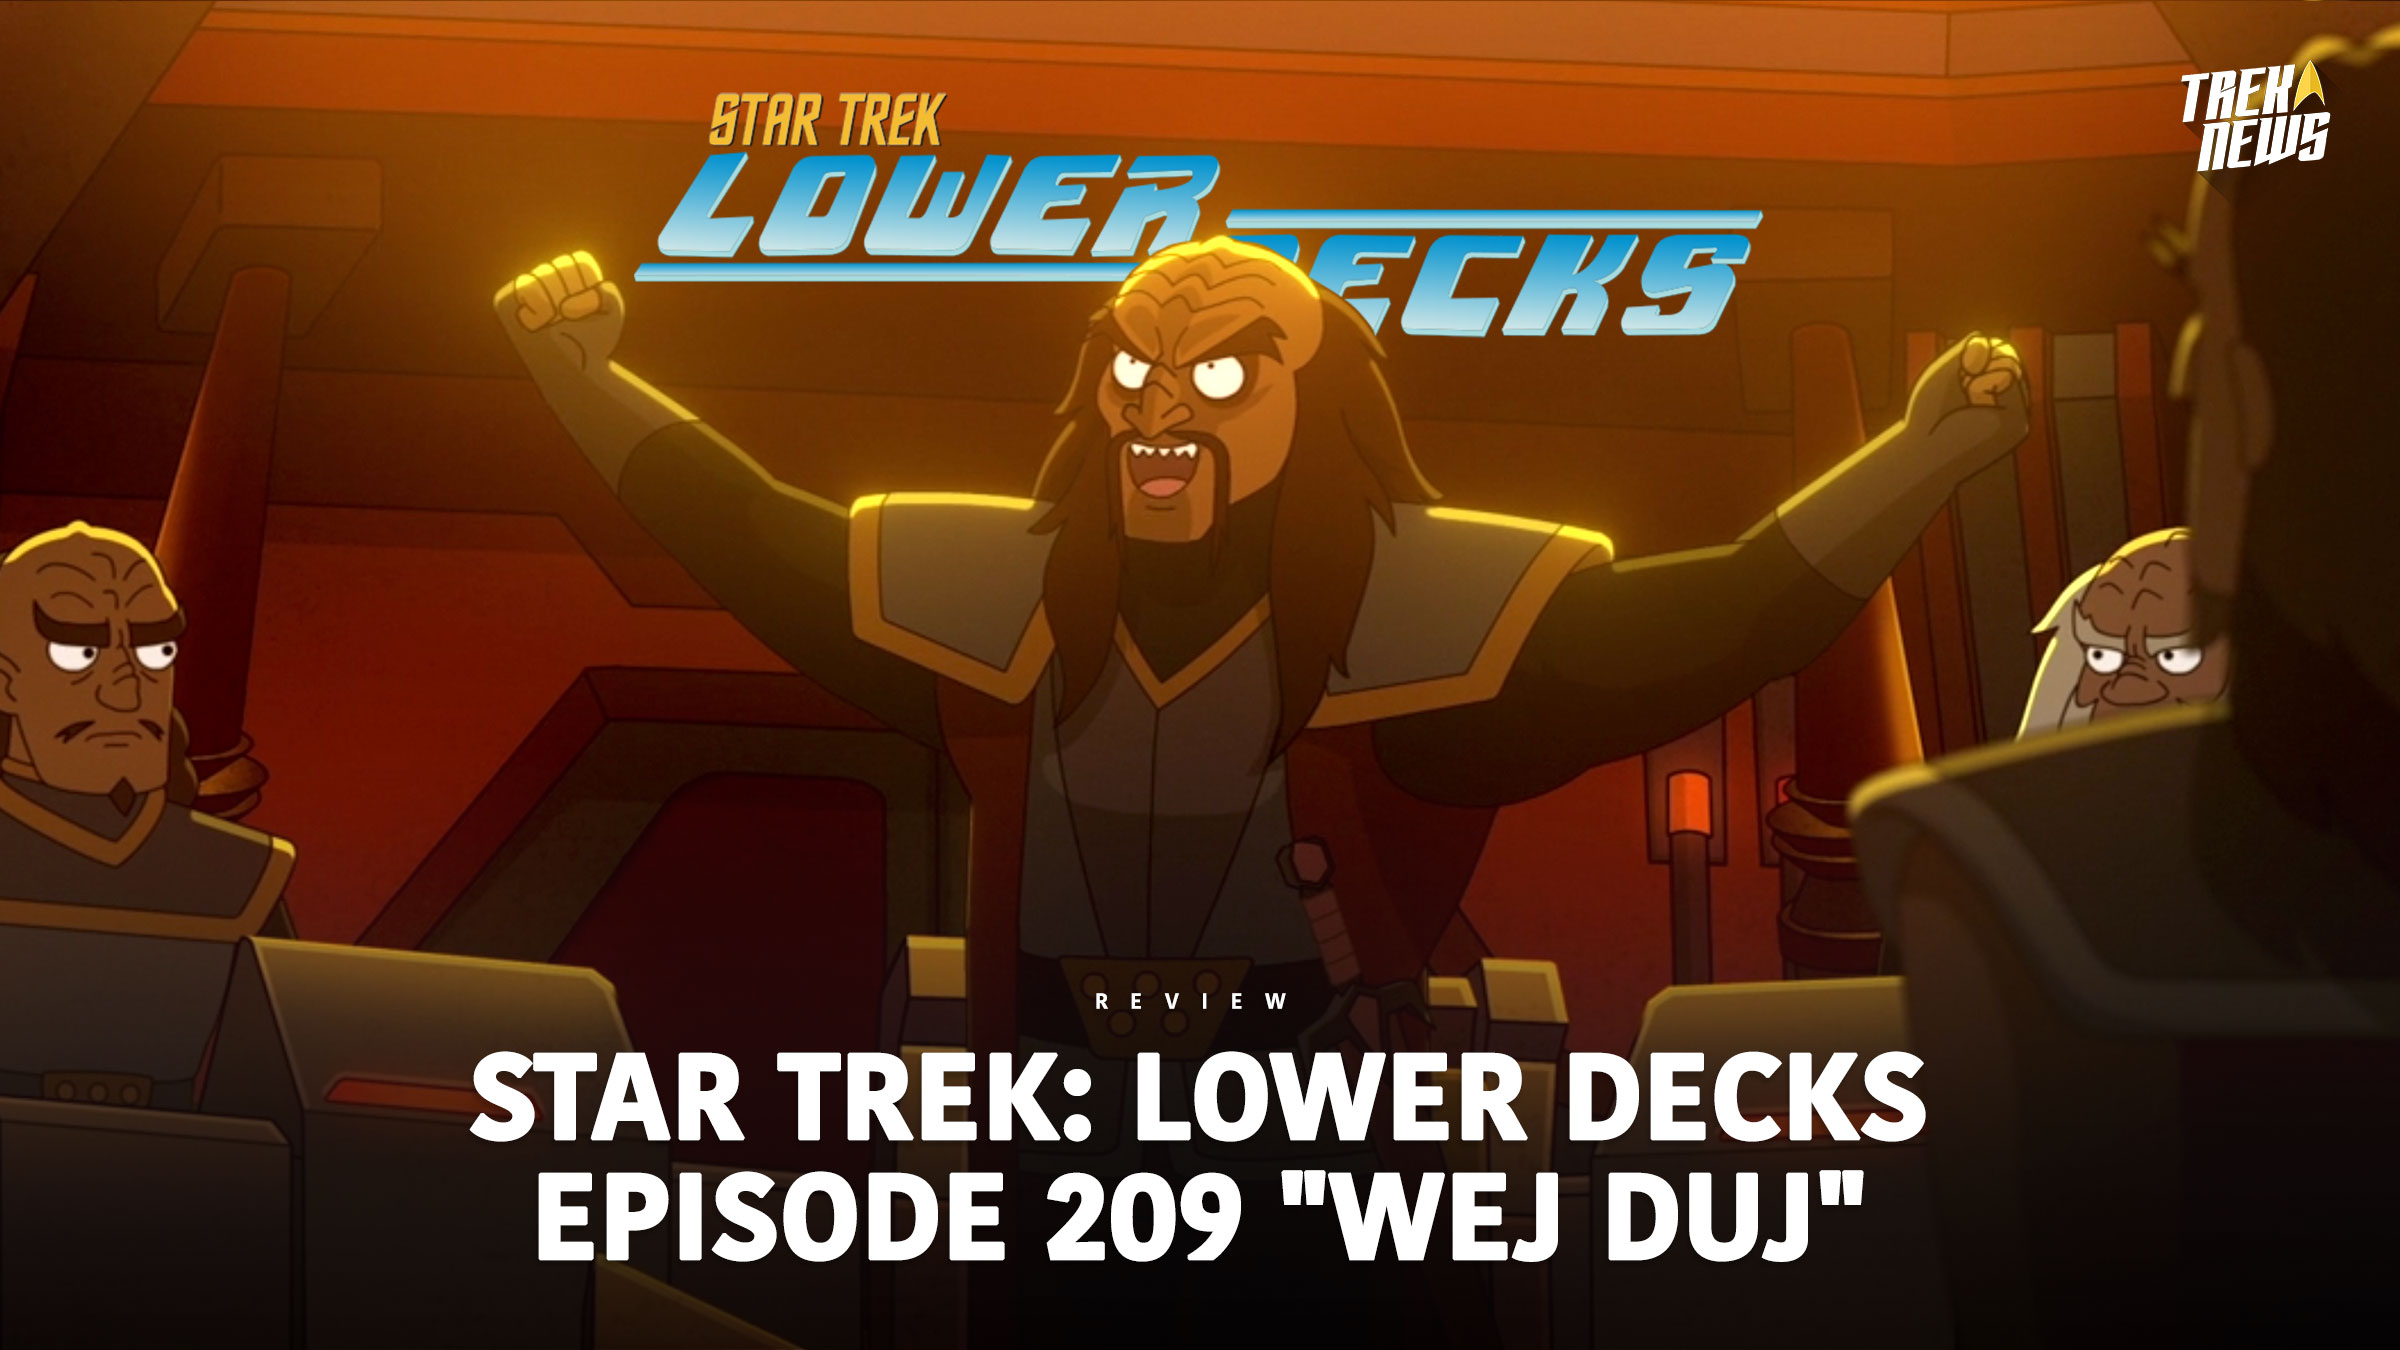 Star Trek: Lower Decks Episode 209 “Wej Duj” Review